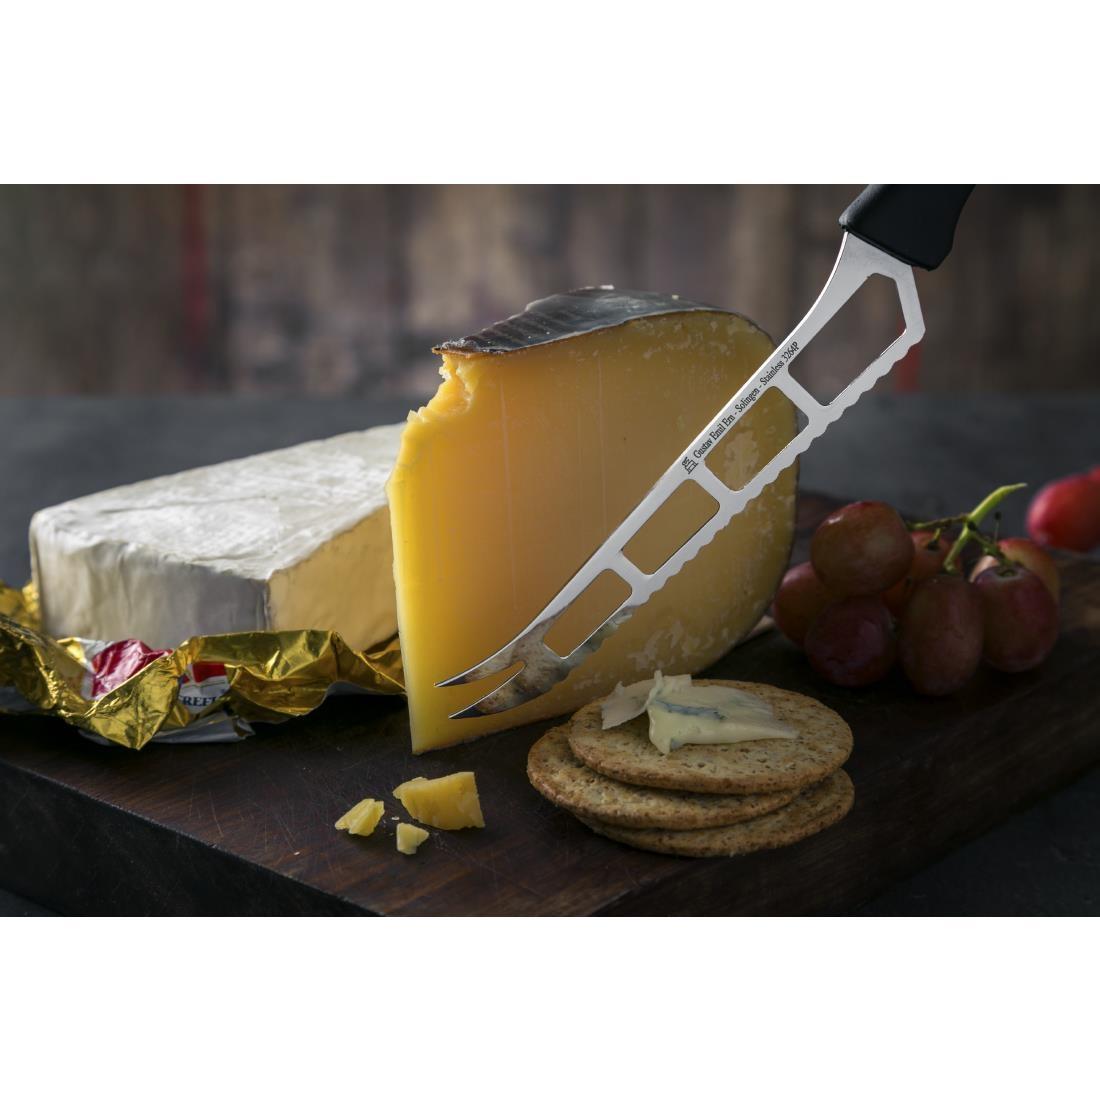 Cheese Knife 25cm - D477  - 2